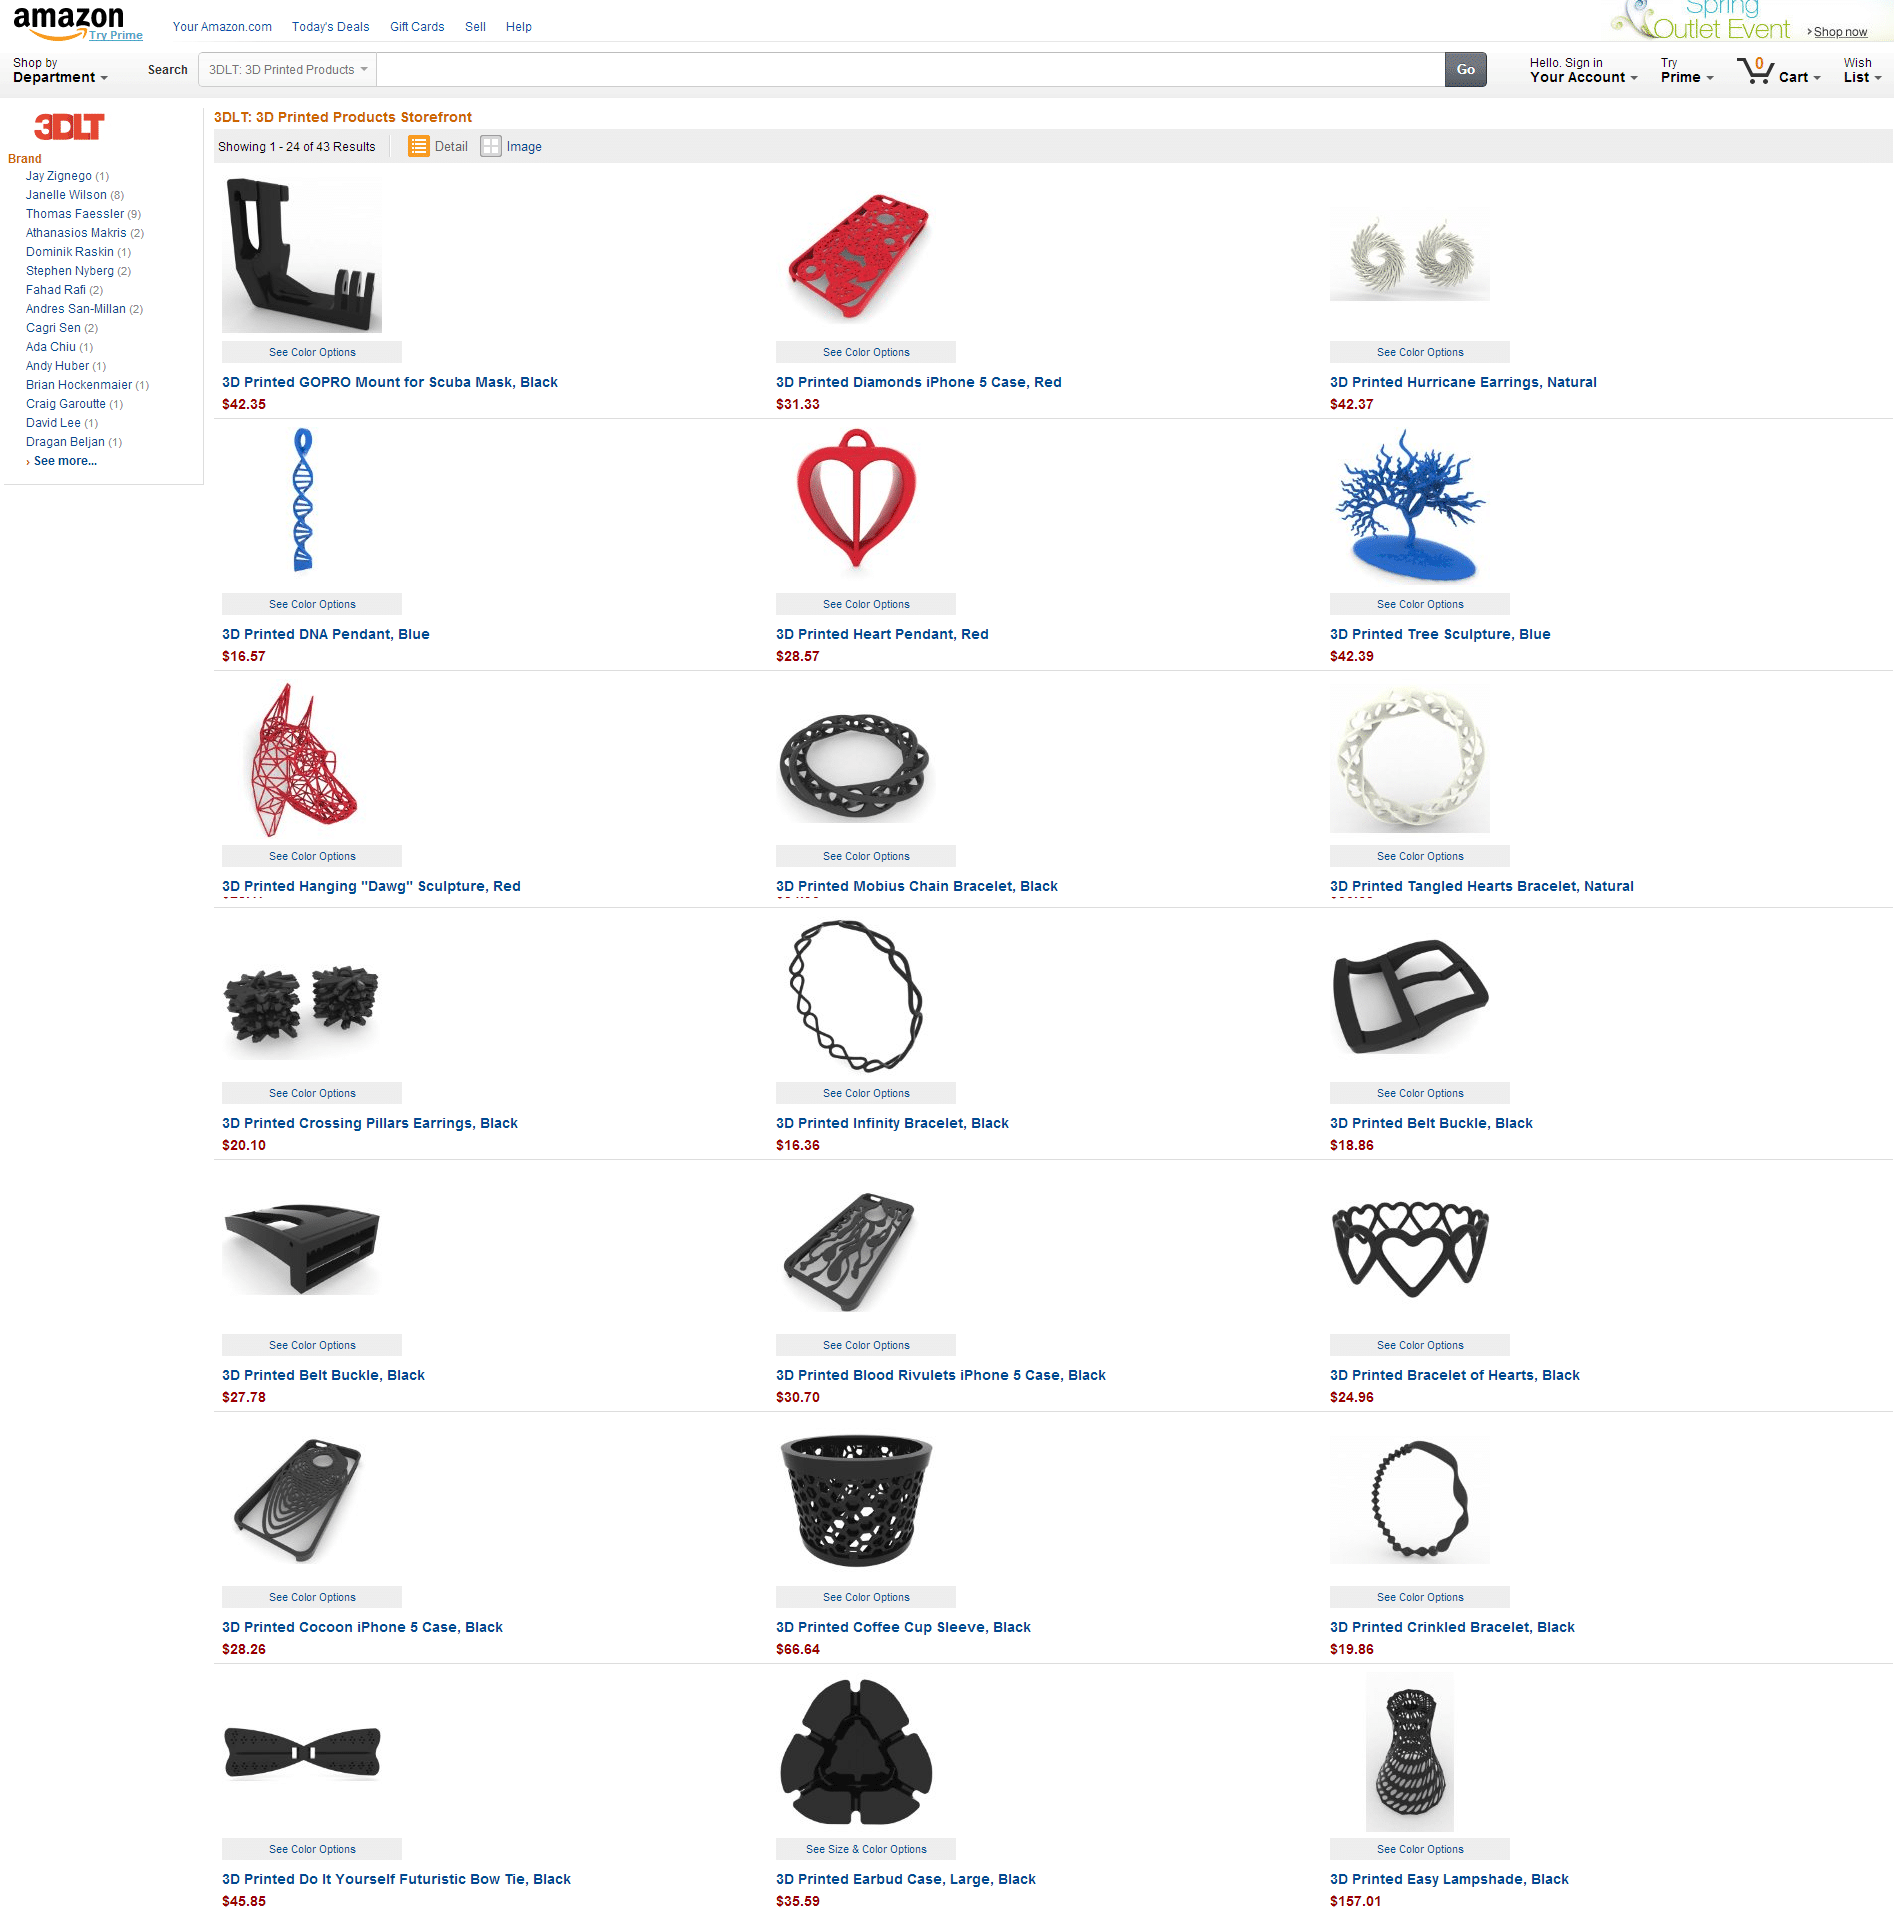 3DLT 3D Printed Products Amazon.com